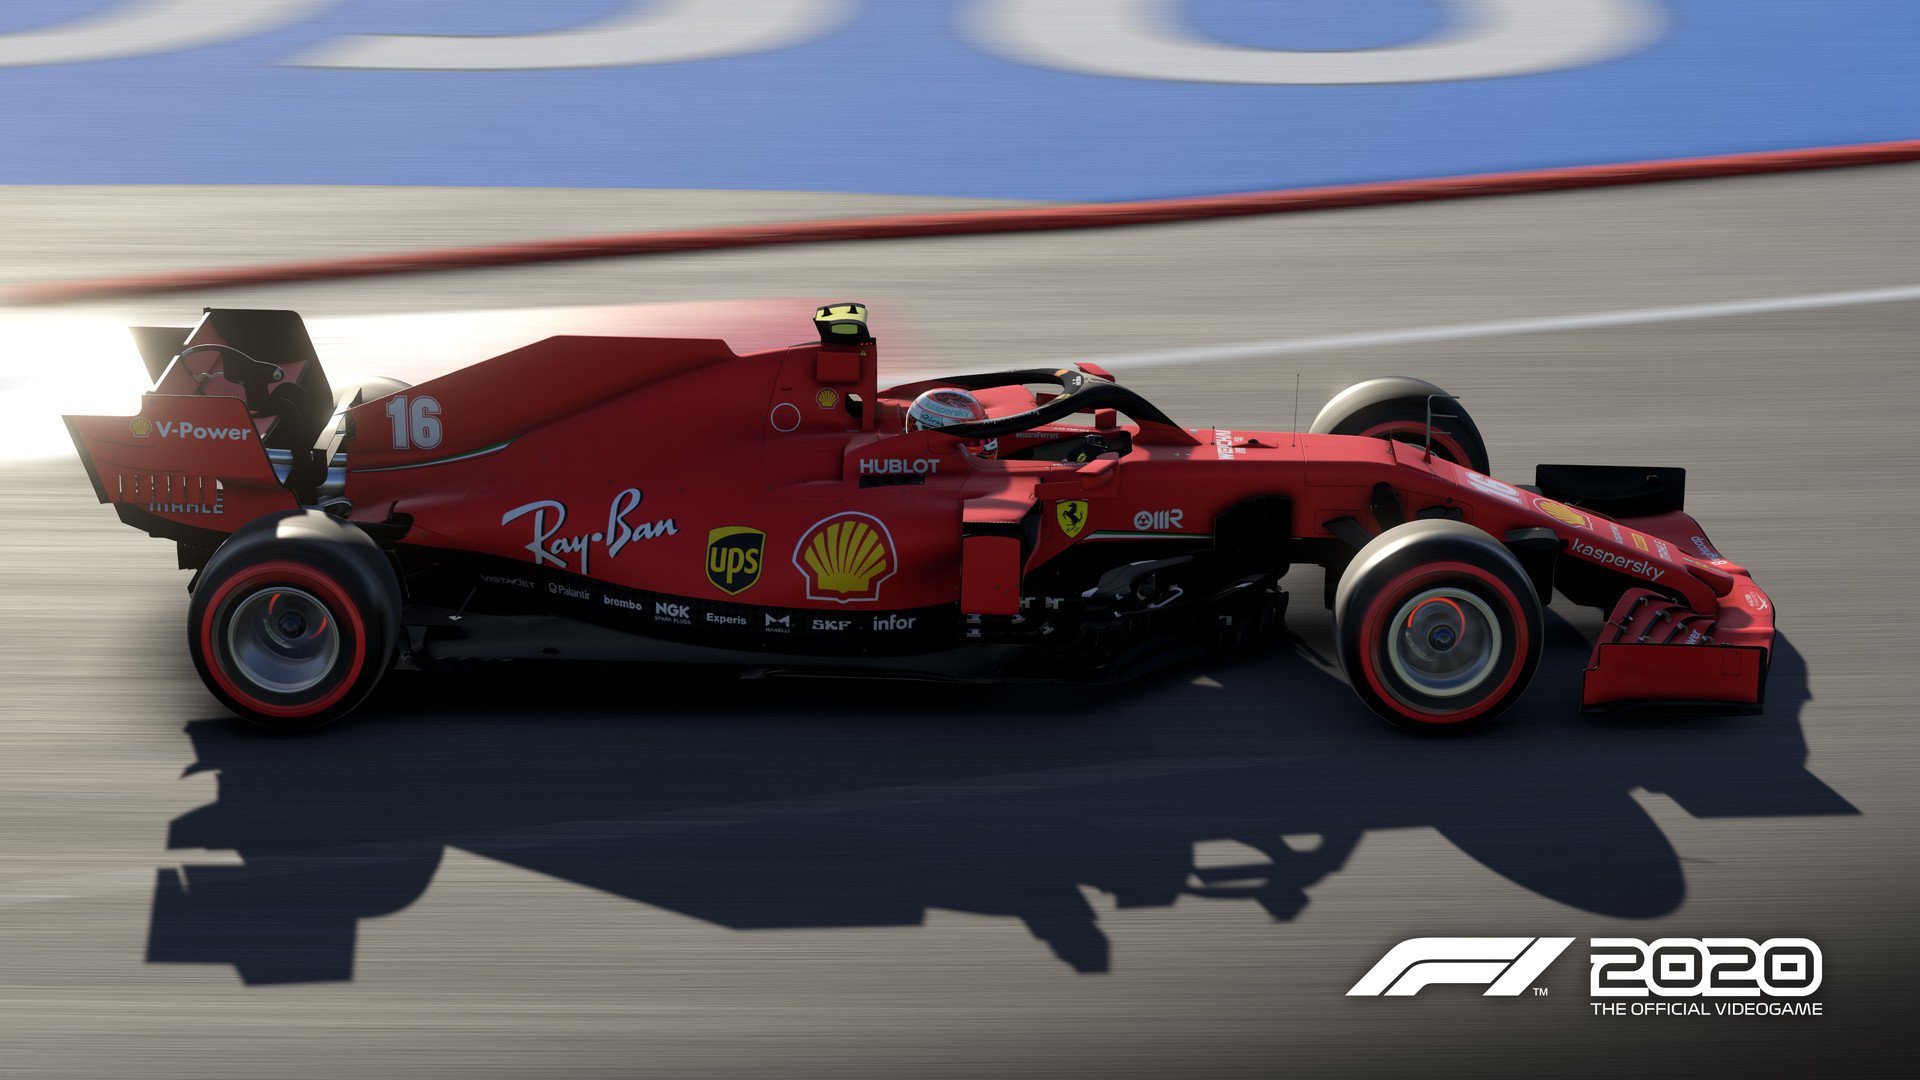 F1 2020 Seventy Edition 4